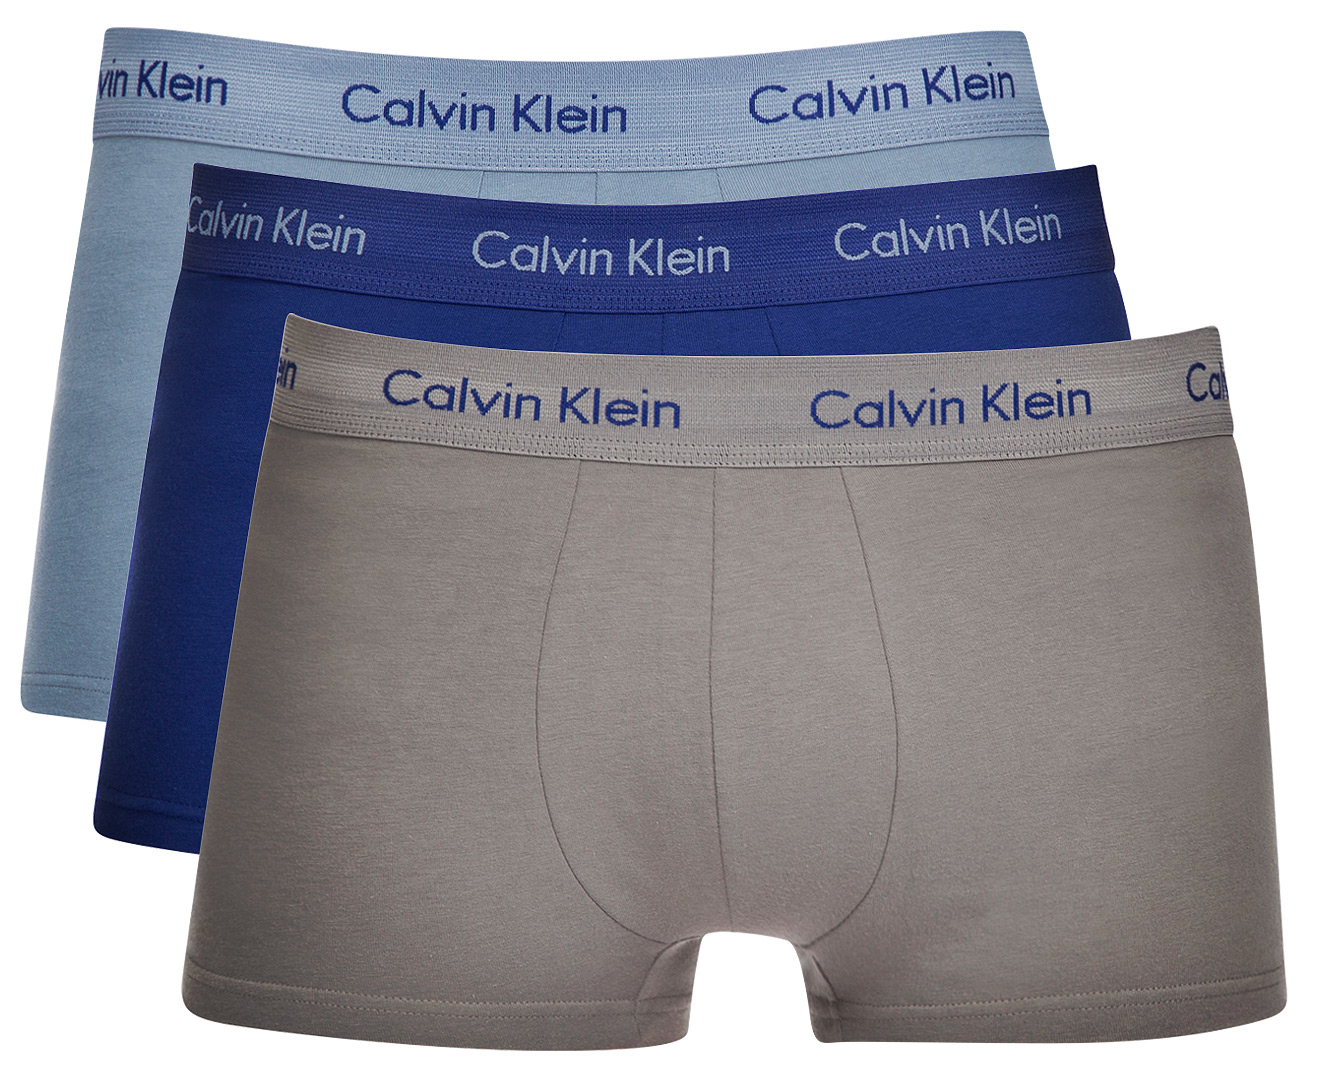 Calvin Klein Men's Cotton Stretch Low Rise Trunks 3-Pack - Multi ...